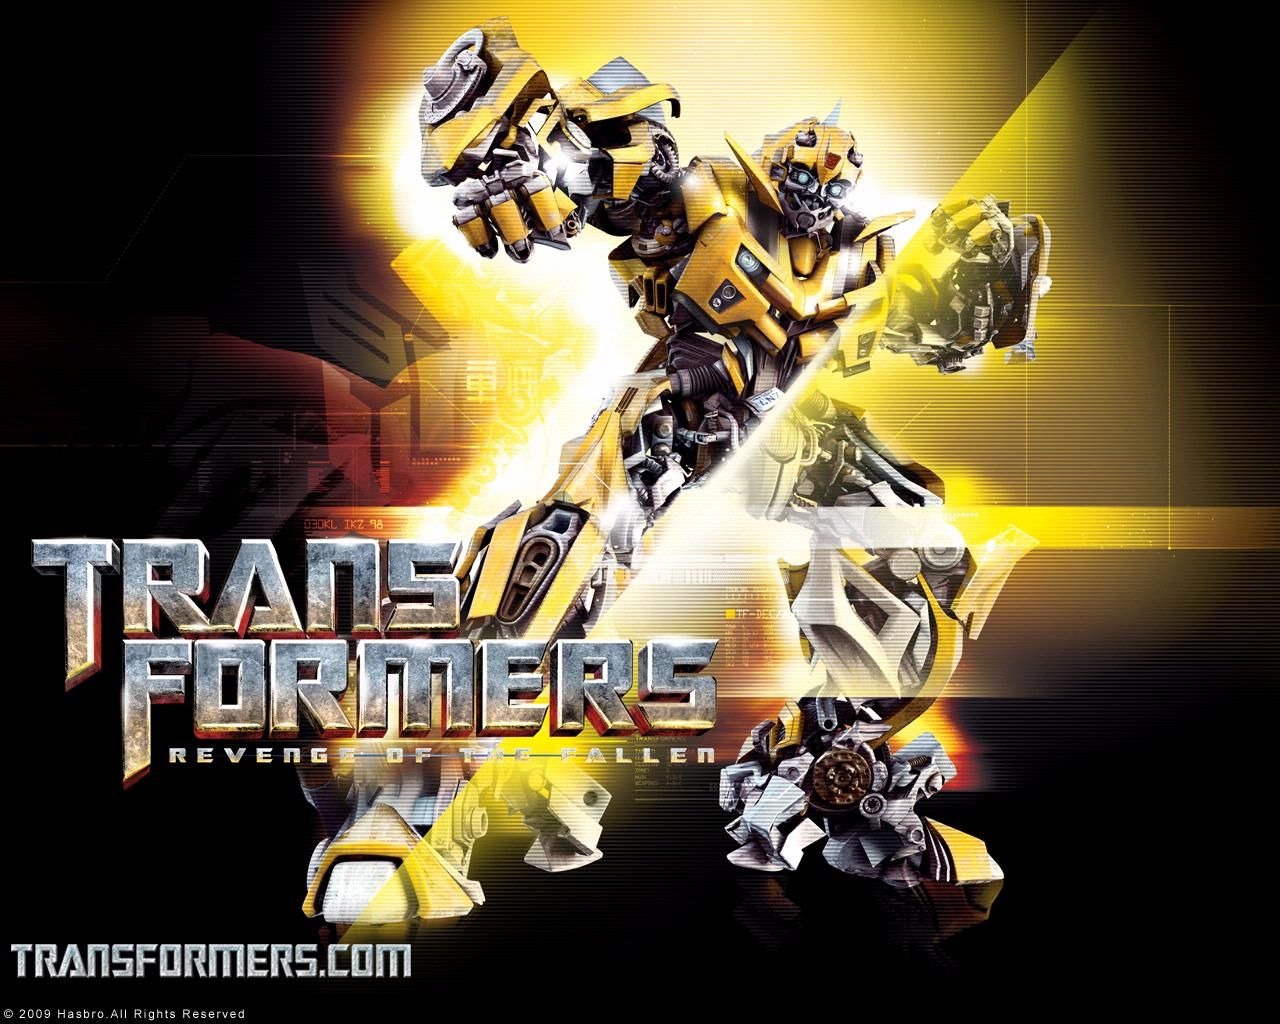 Transformers 2 style wallpaper #9 - 1280x1024